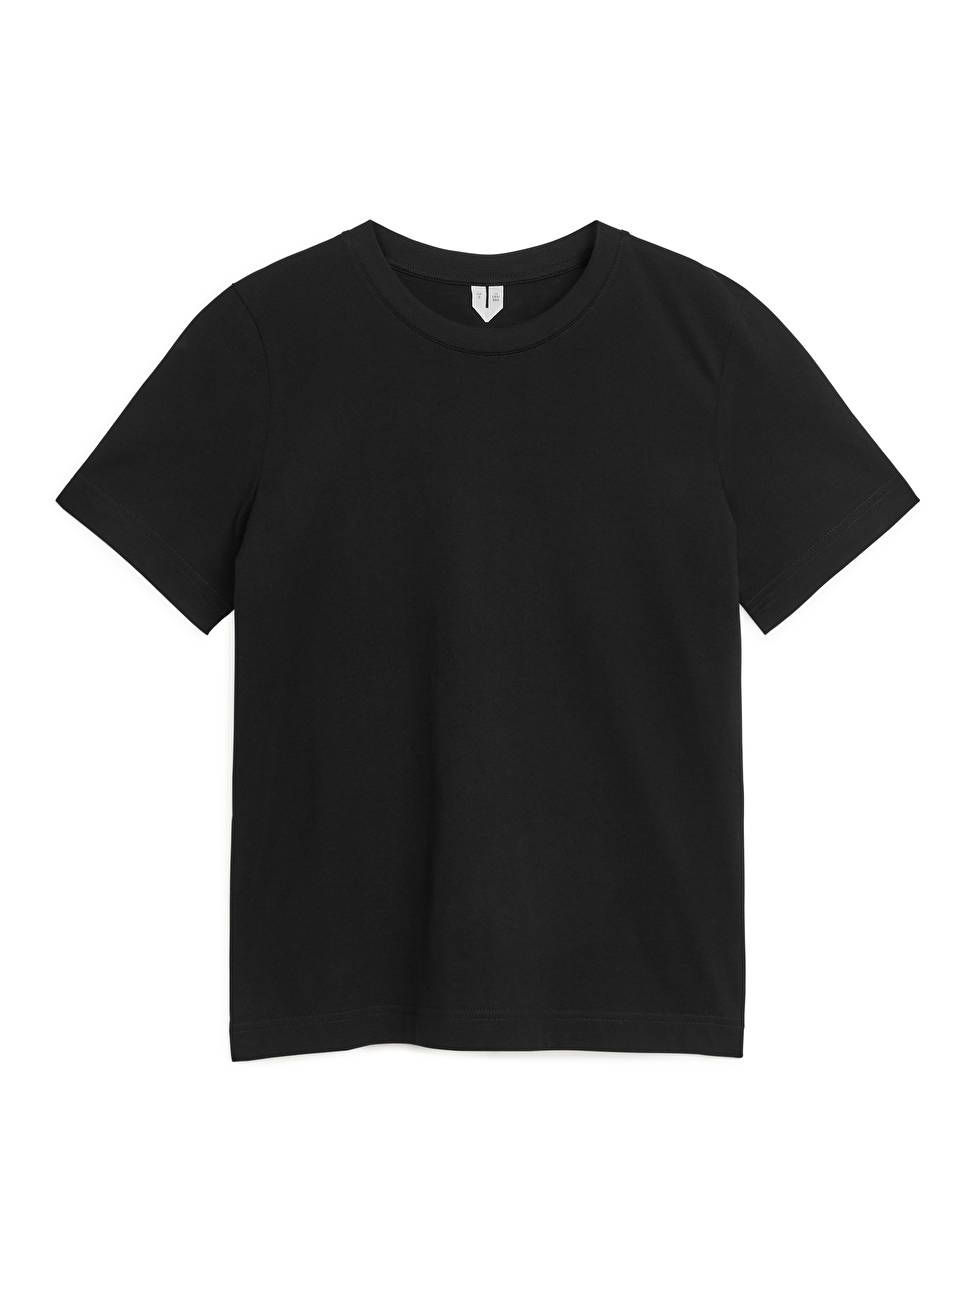 Crew-Neck T-shirt
				
				£17 | ARKET (US&UK)